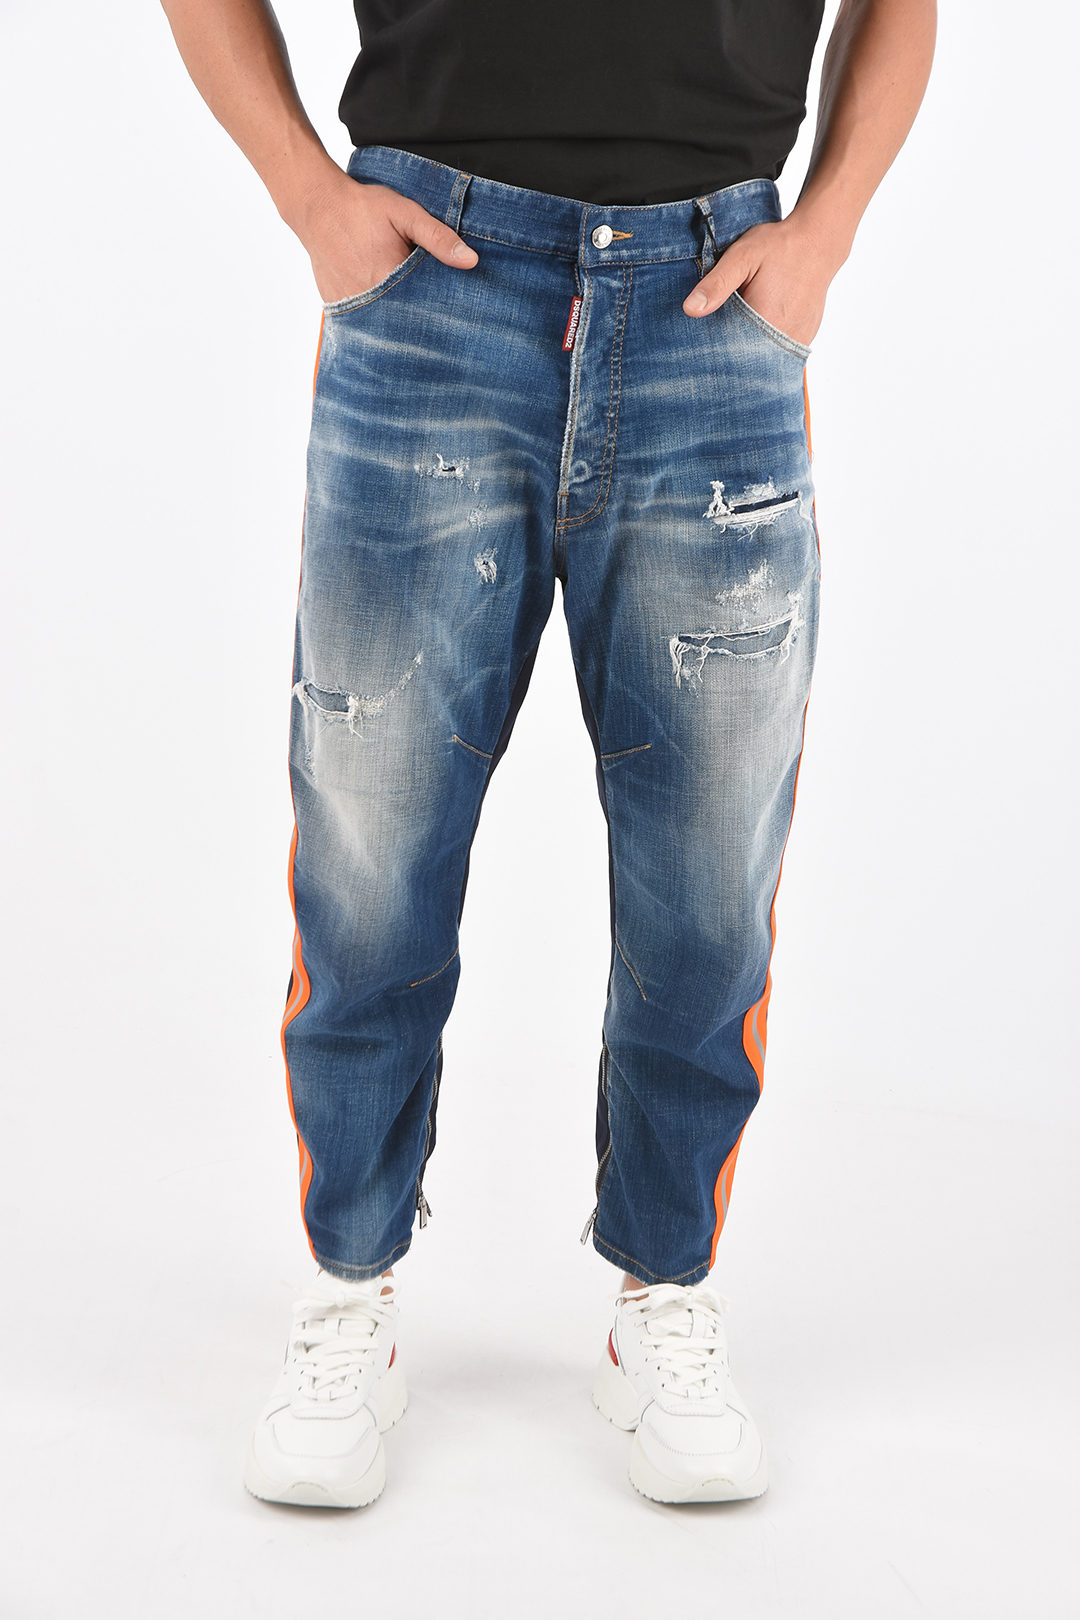 NEW Dsquared2 Detachable Hood Men's Slim Fit Stretchy Blue Jacket Jeans